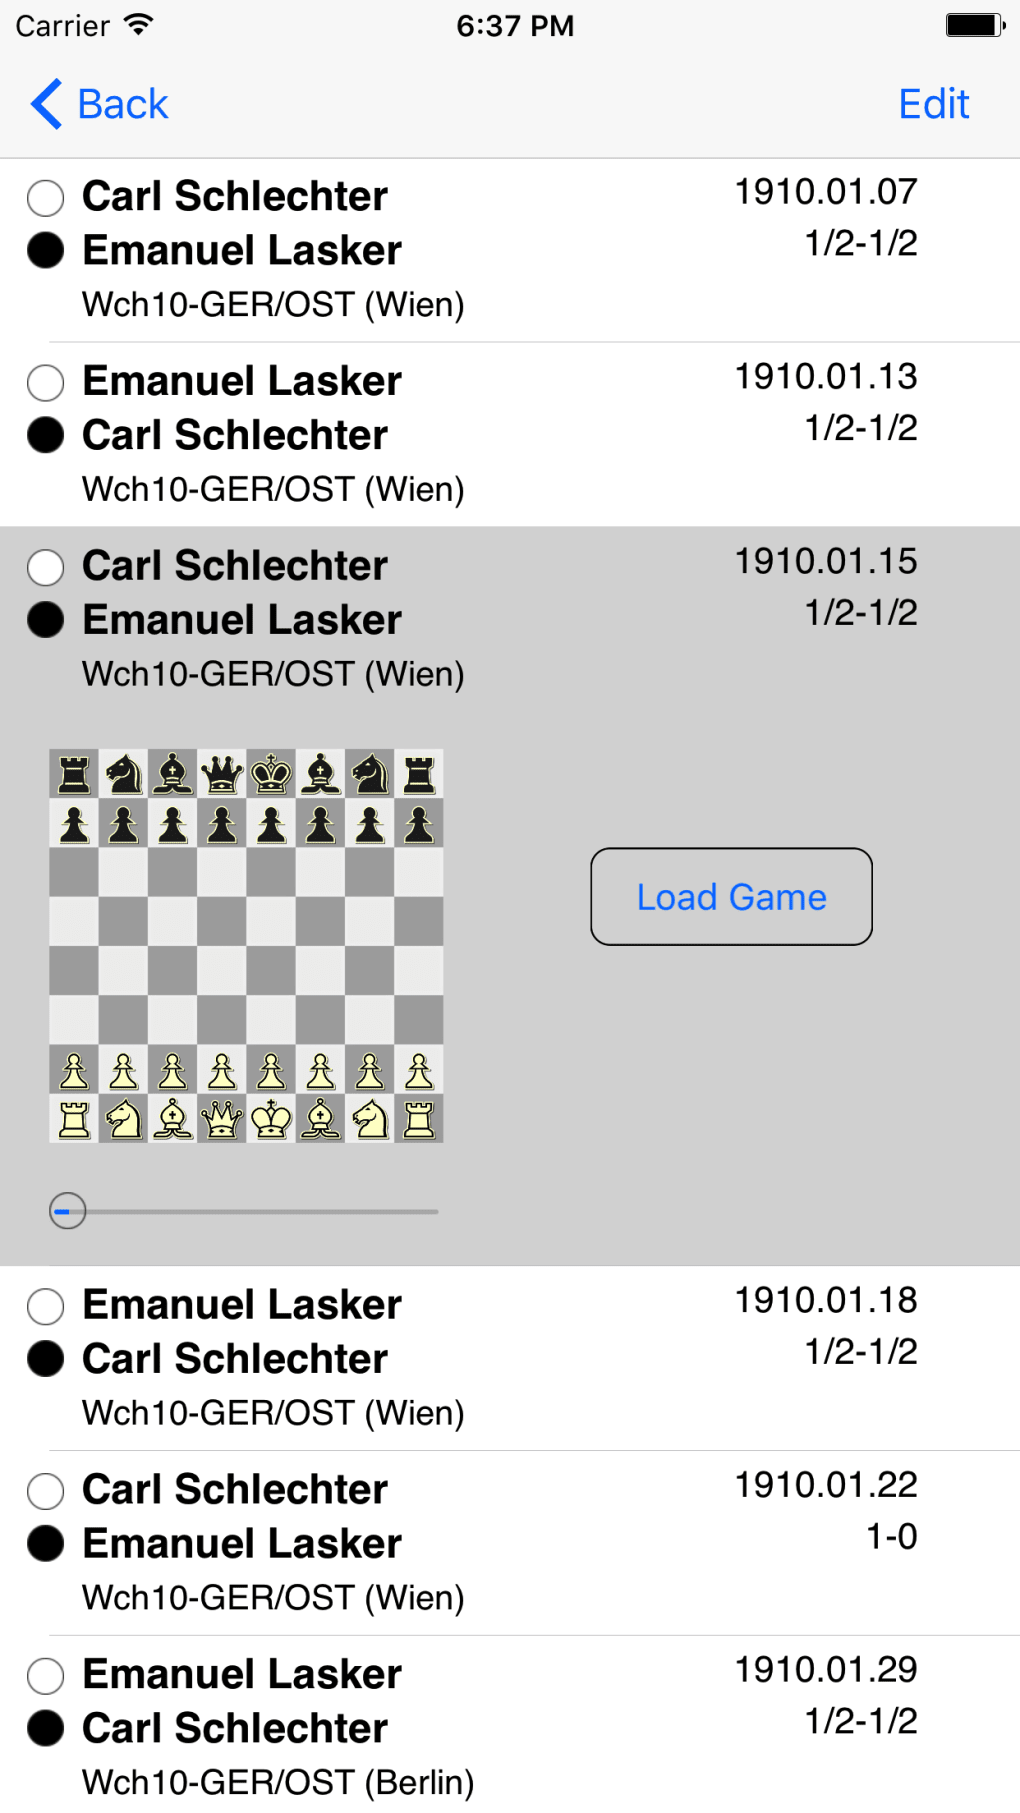 SmallFish Chess for Stockfish 16.16.8 Free Download